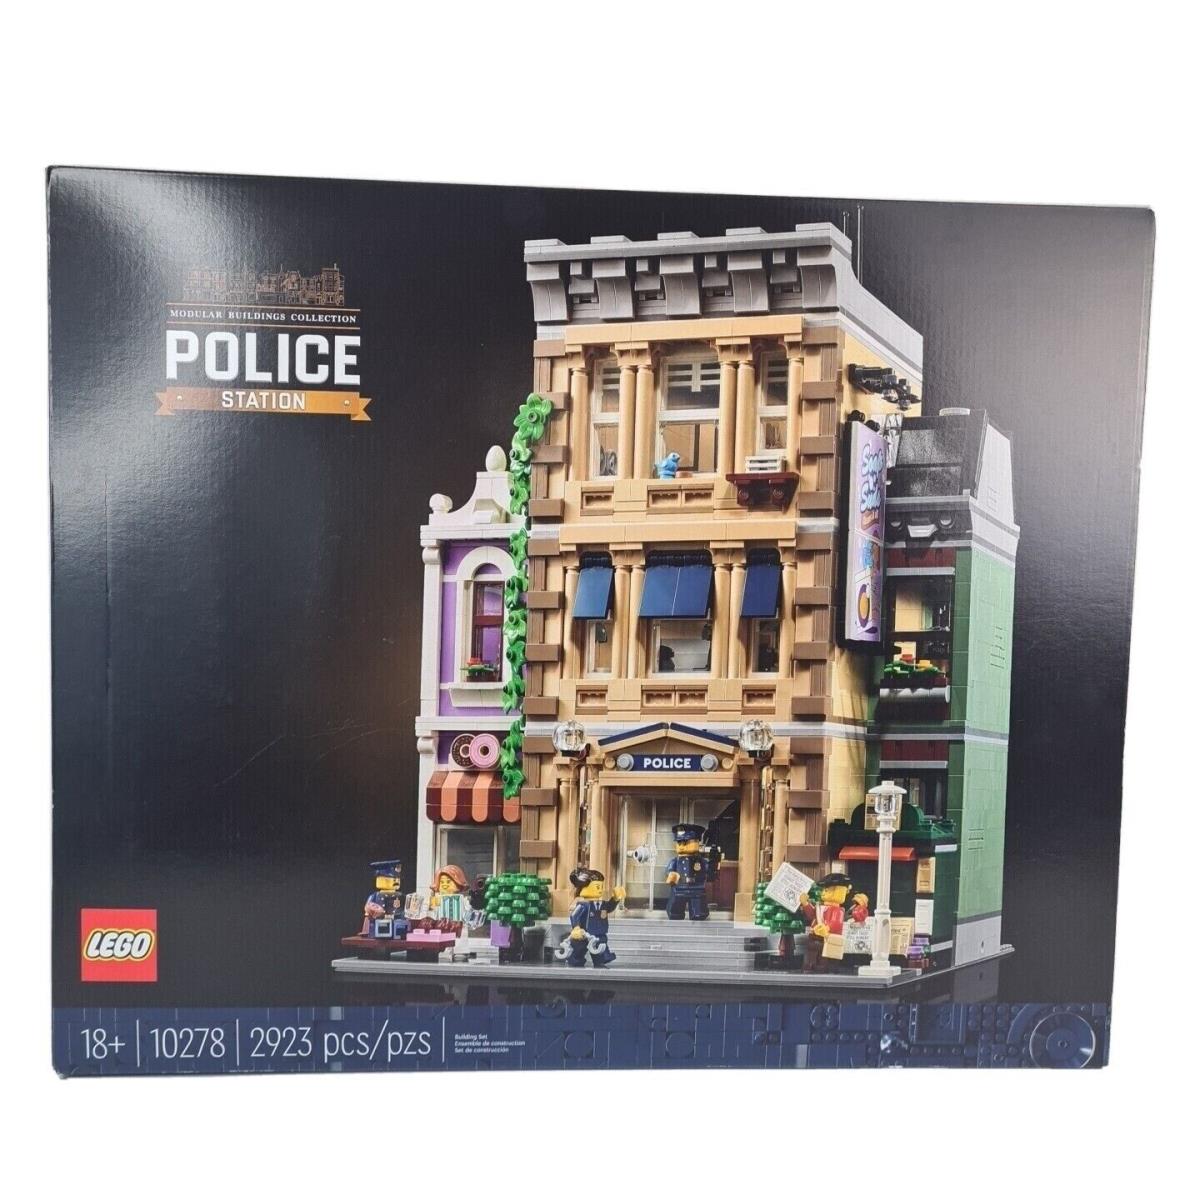 Modular Building Collection Police Station Lego 10278 Creator Expert 2923 Pcs